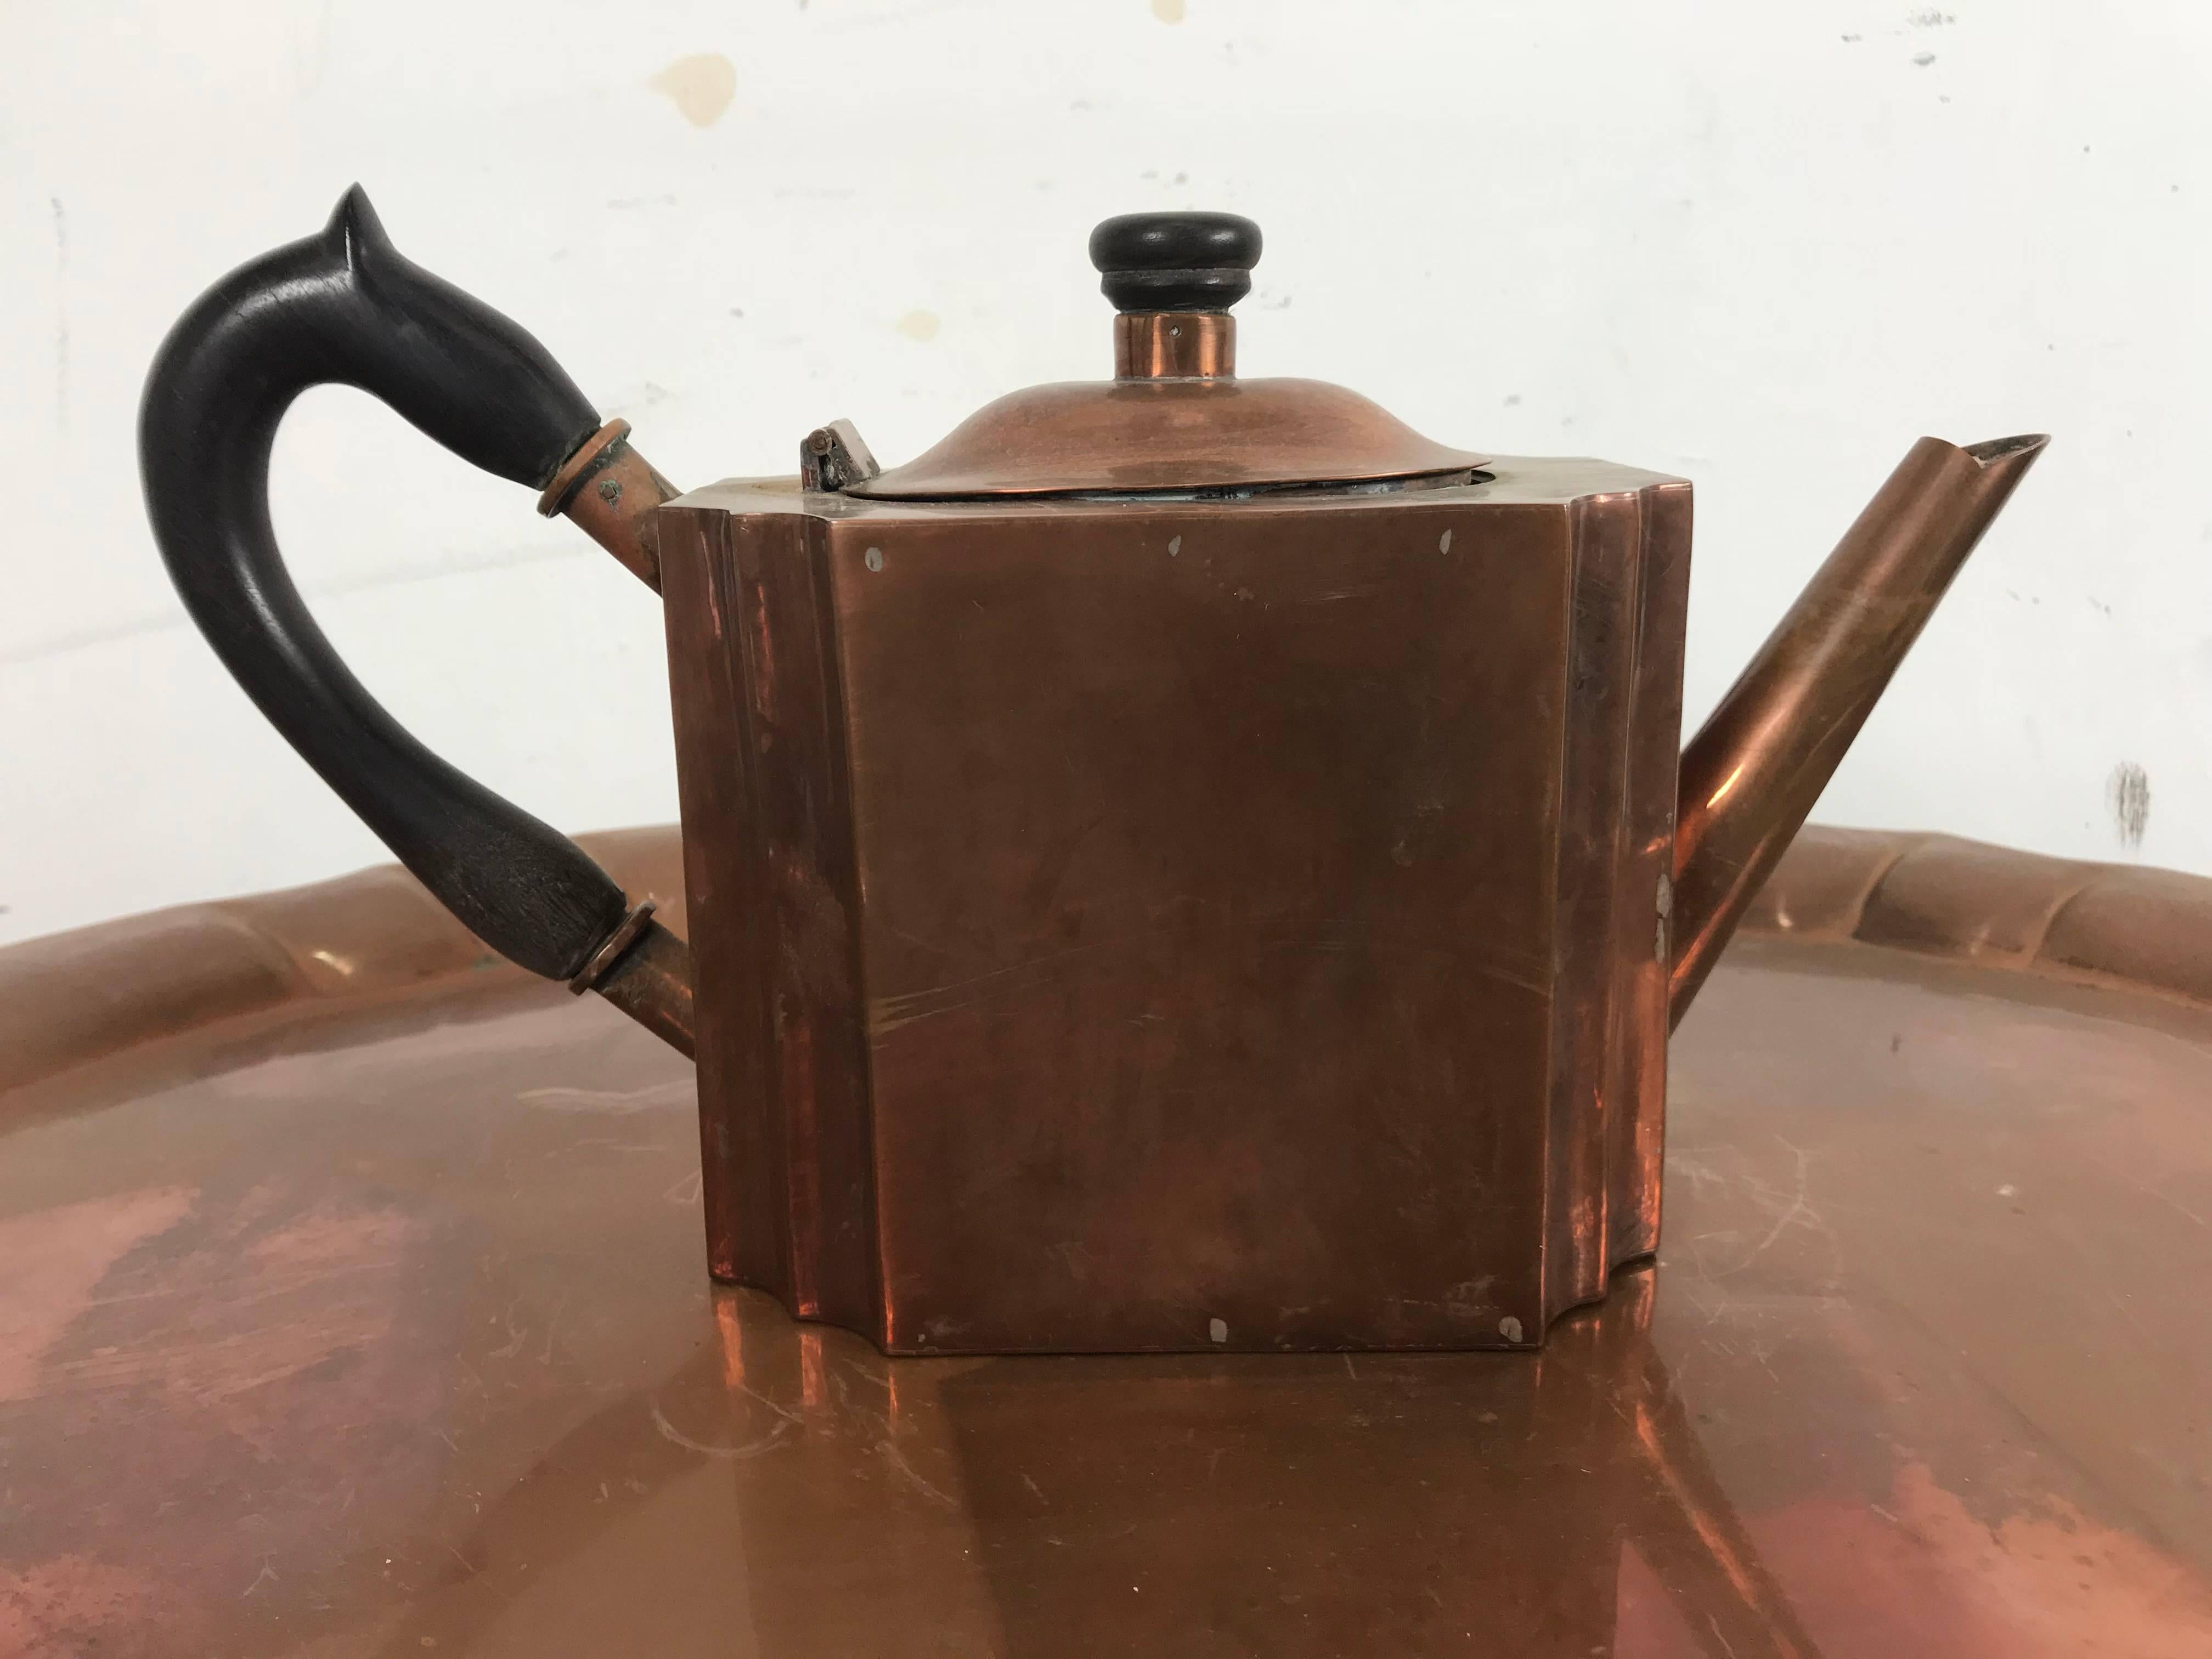 Stylized Six-Piece Art Deco Copper Tea and Coffee Set Creamer, Sugar Tray 1